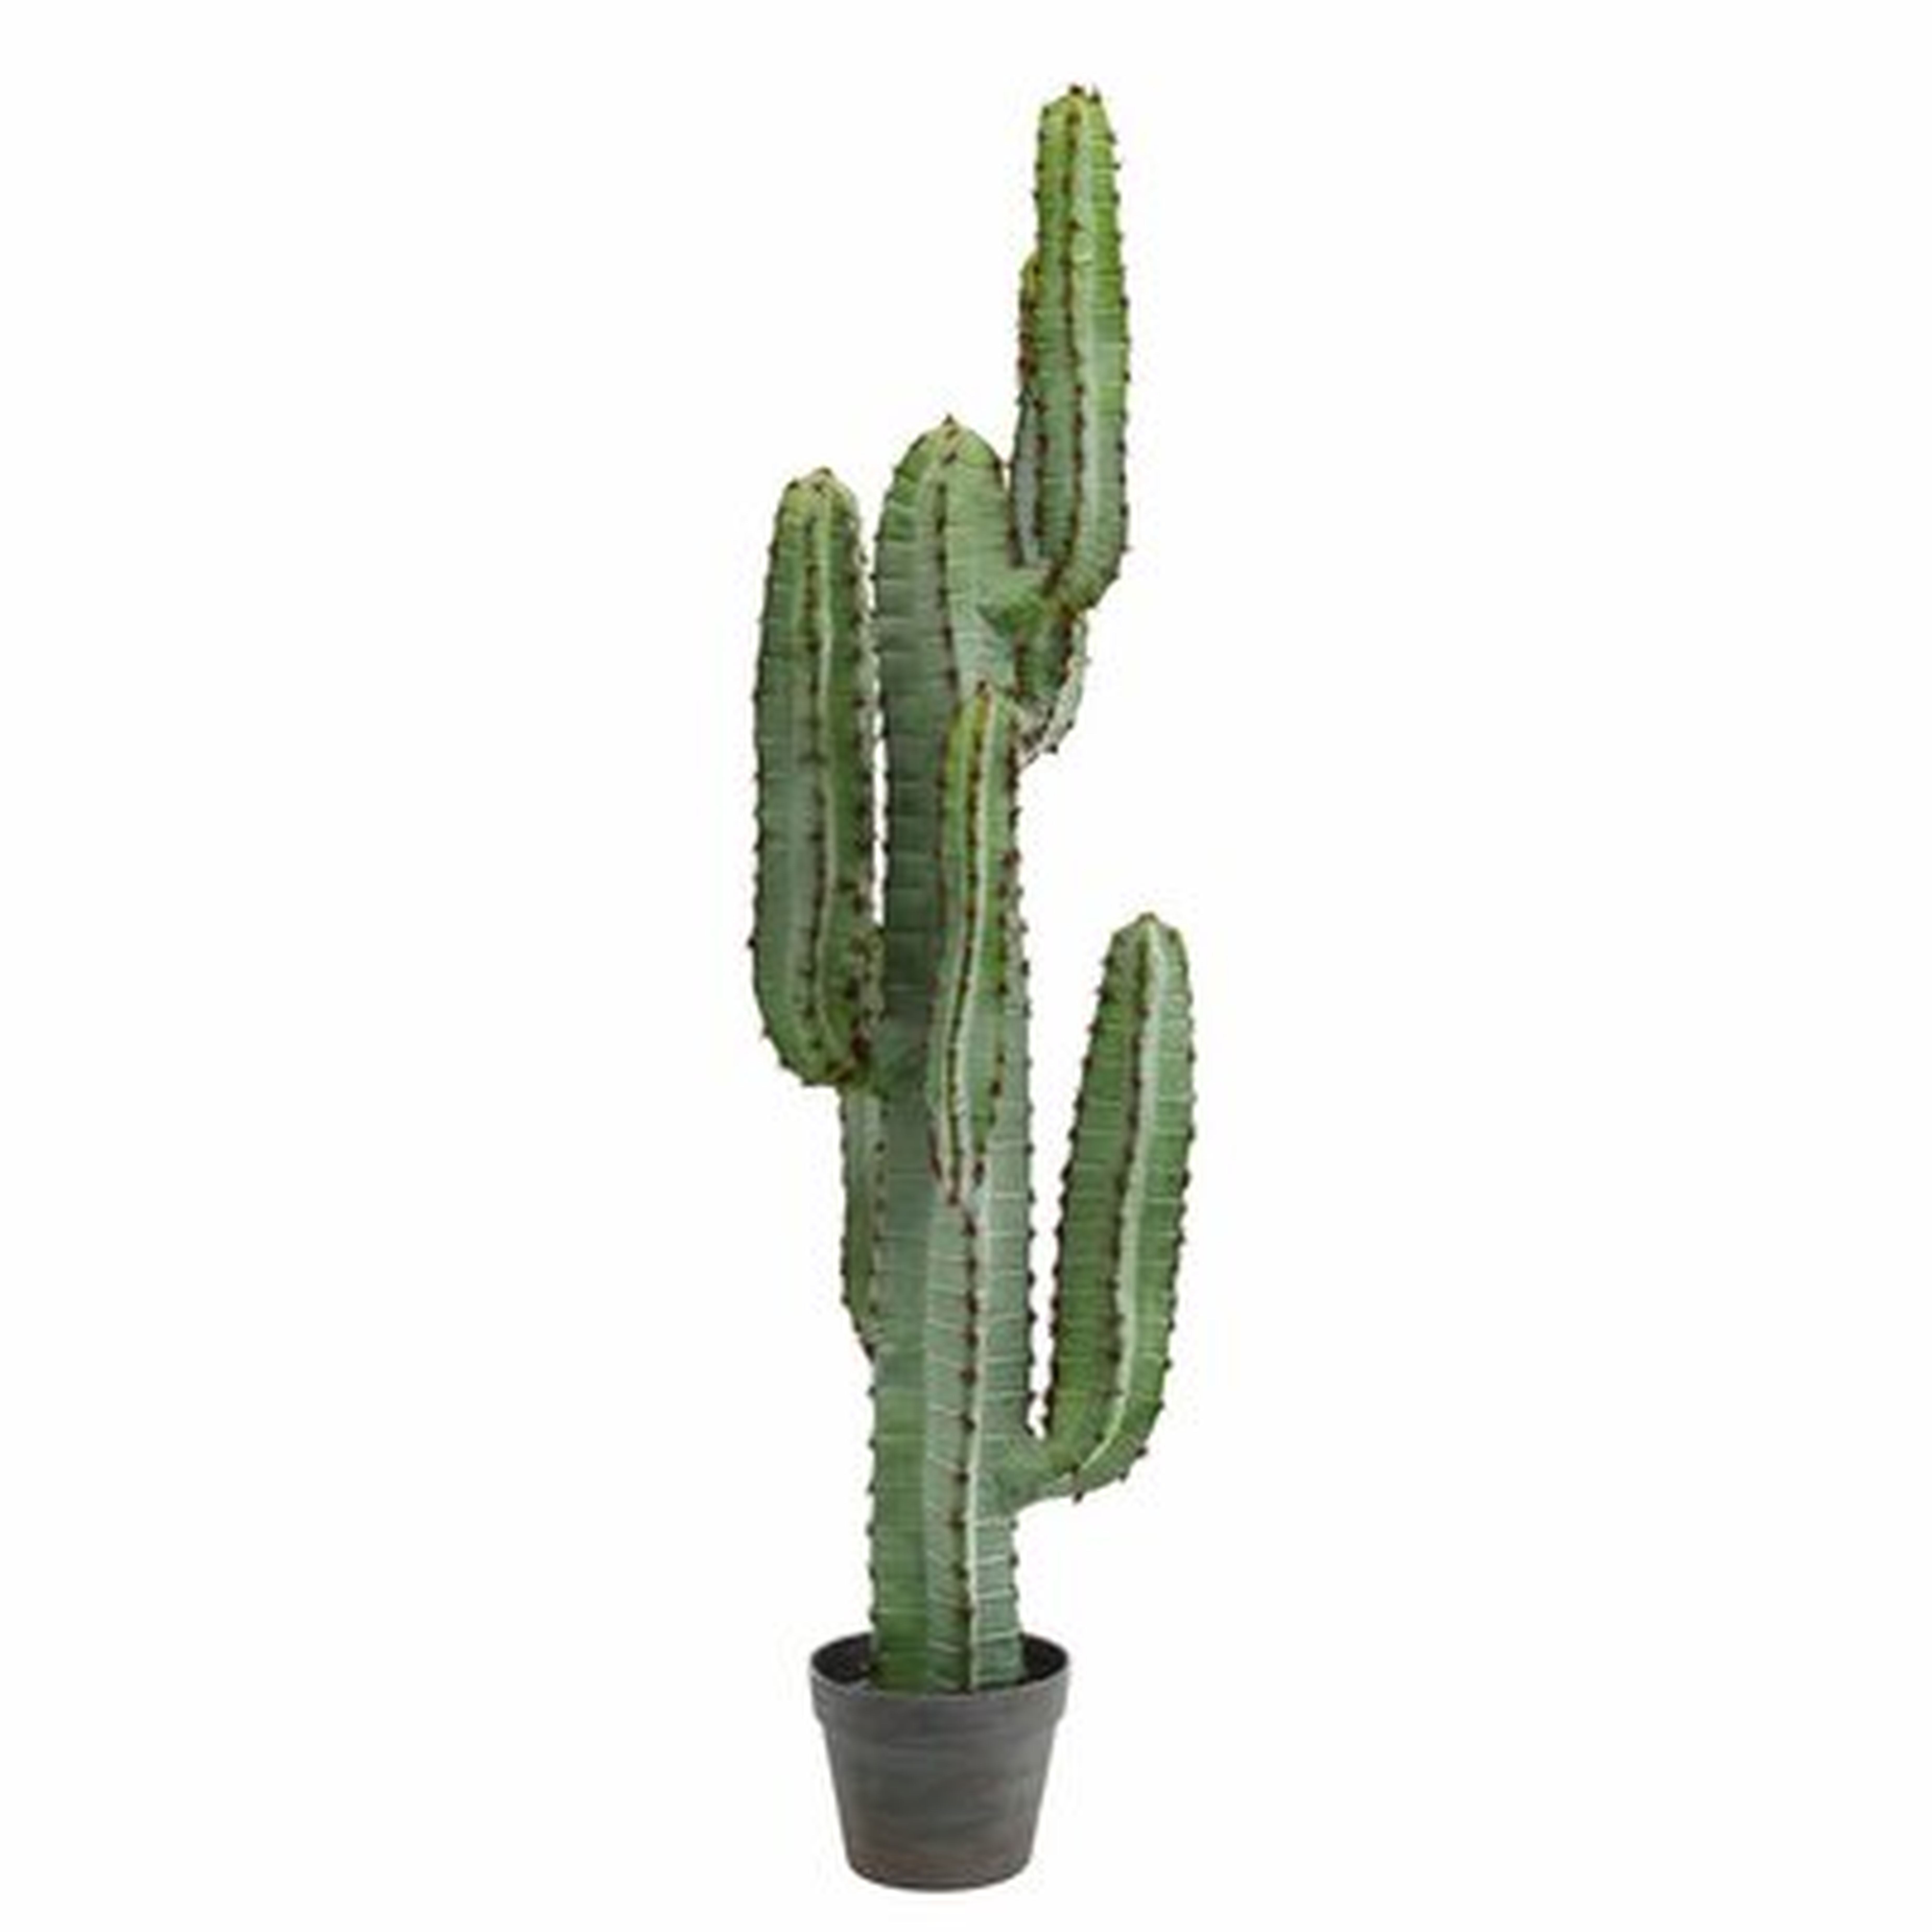 Cactus Plant in Pot - Wayfair